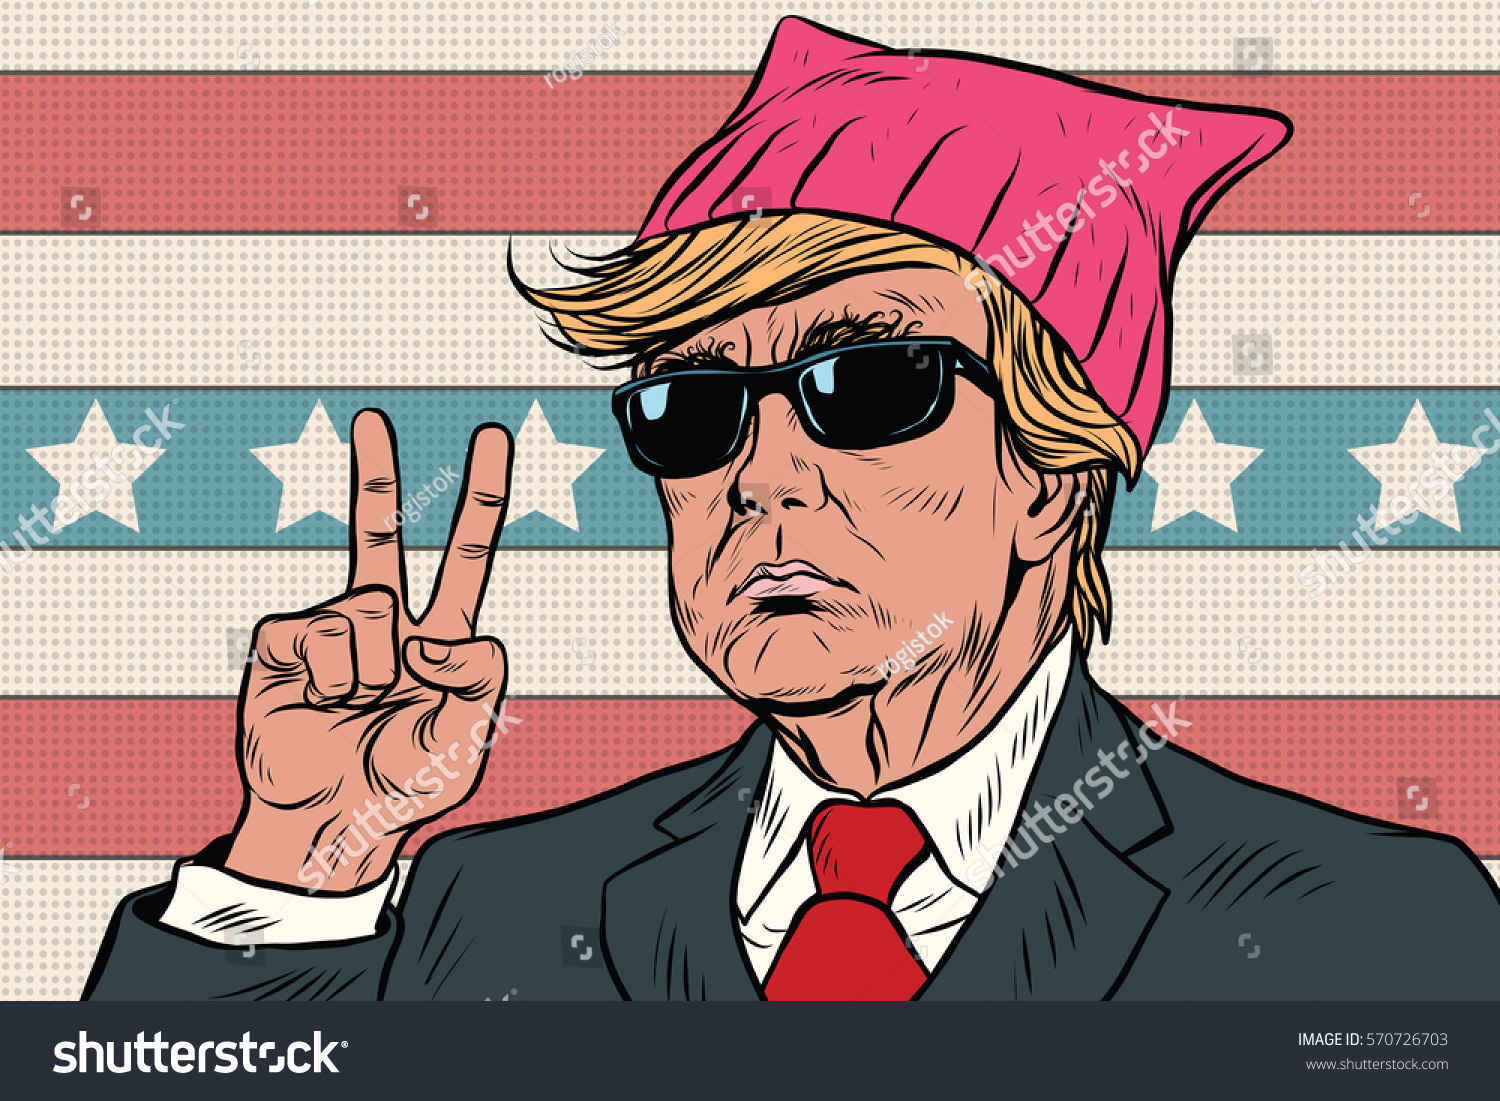 stock-vector-donald-trump-president-feminist-pink-pussy-hat-570726703.jpg